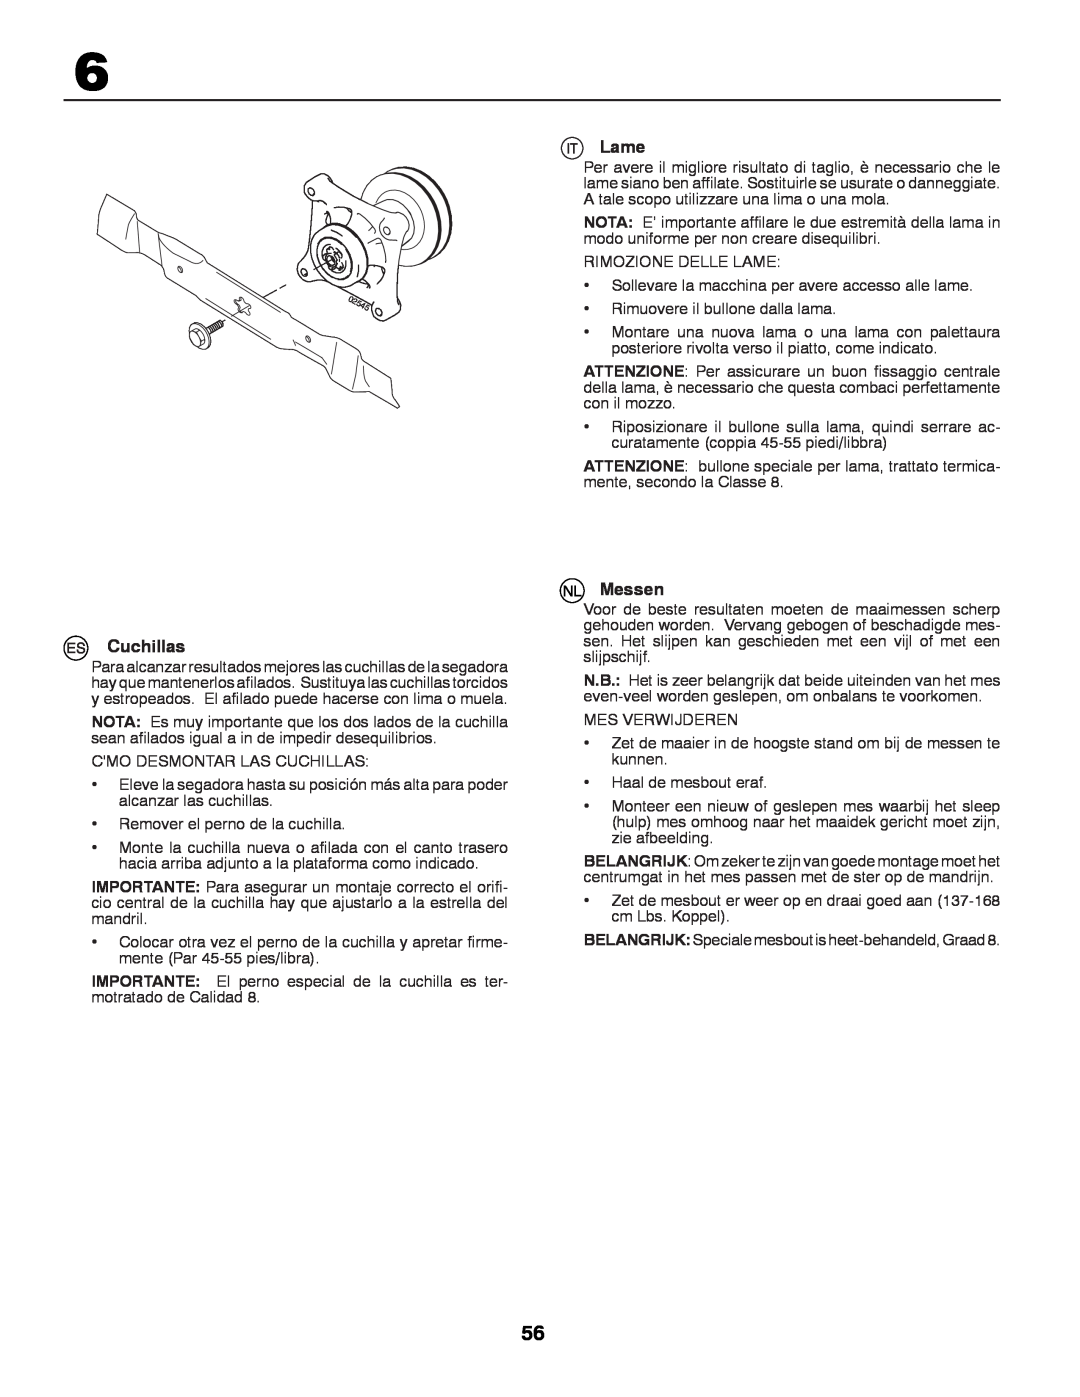 McCulloch M13597H, 96041000901 instruction manual Cuchillas, Lame, Messen 